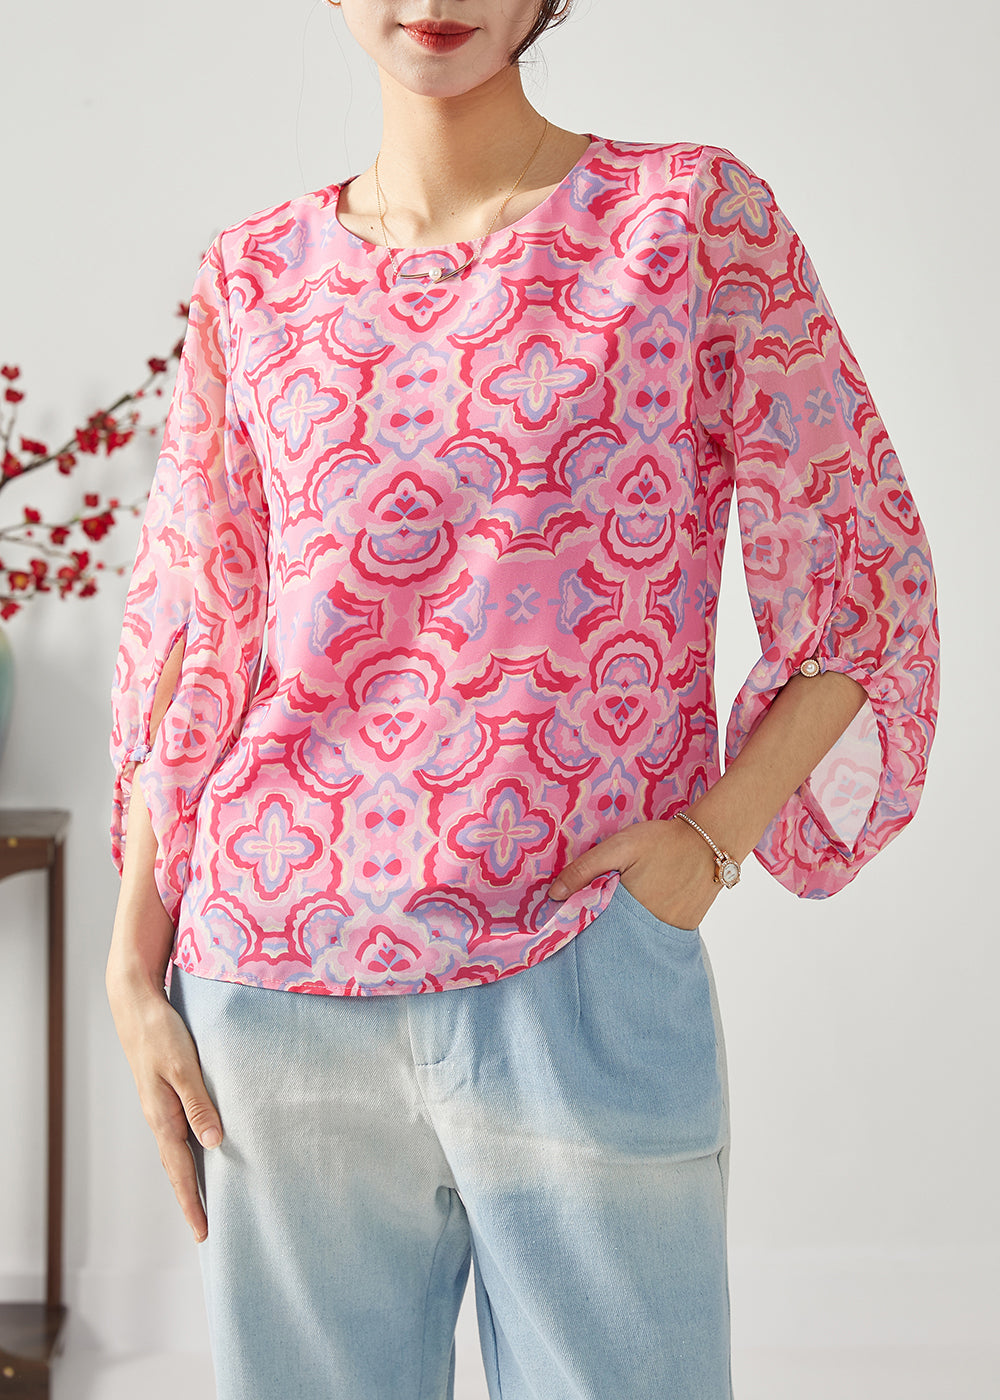 Fashion Rose Oversized Print Chiffon Shirt Top Bracelet Sleeve LY1115 - fabuloryshop